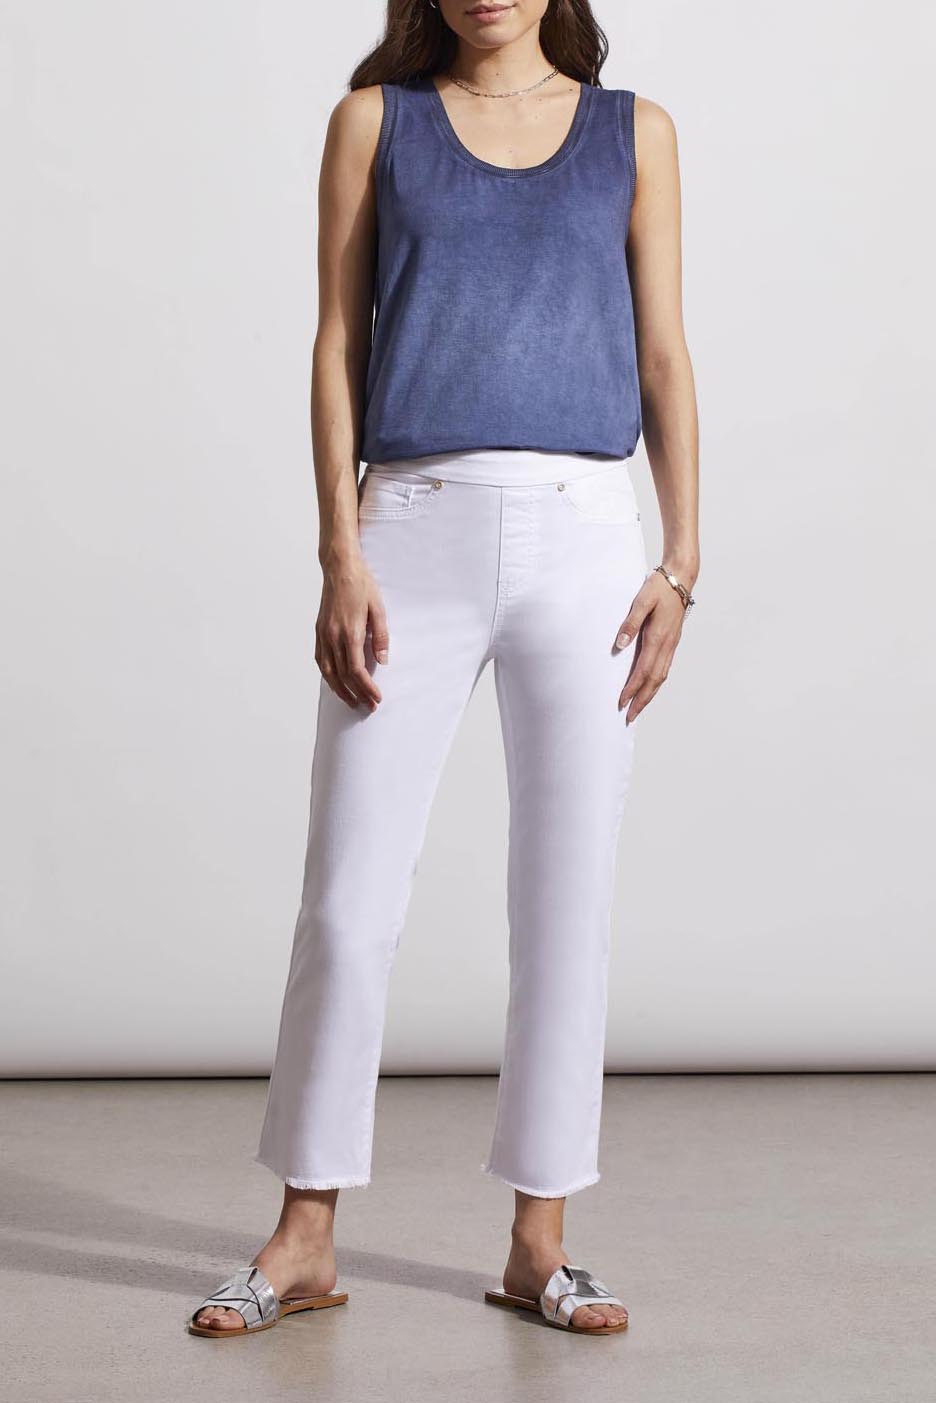 Tribal Jeans 67330-WHITE